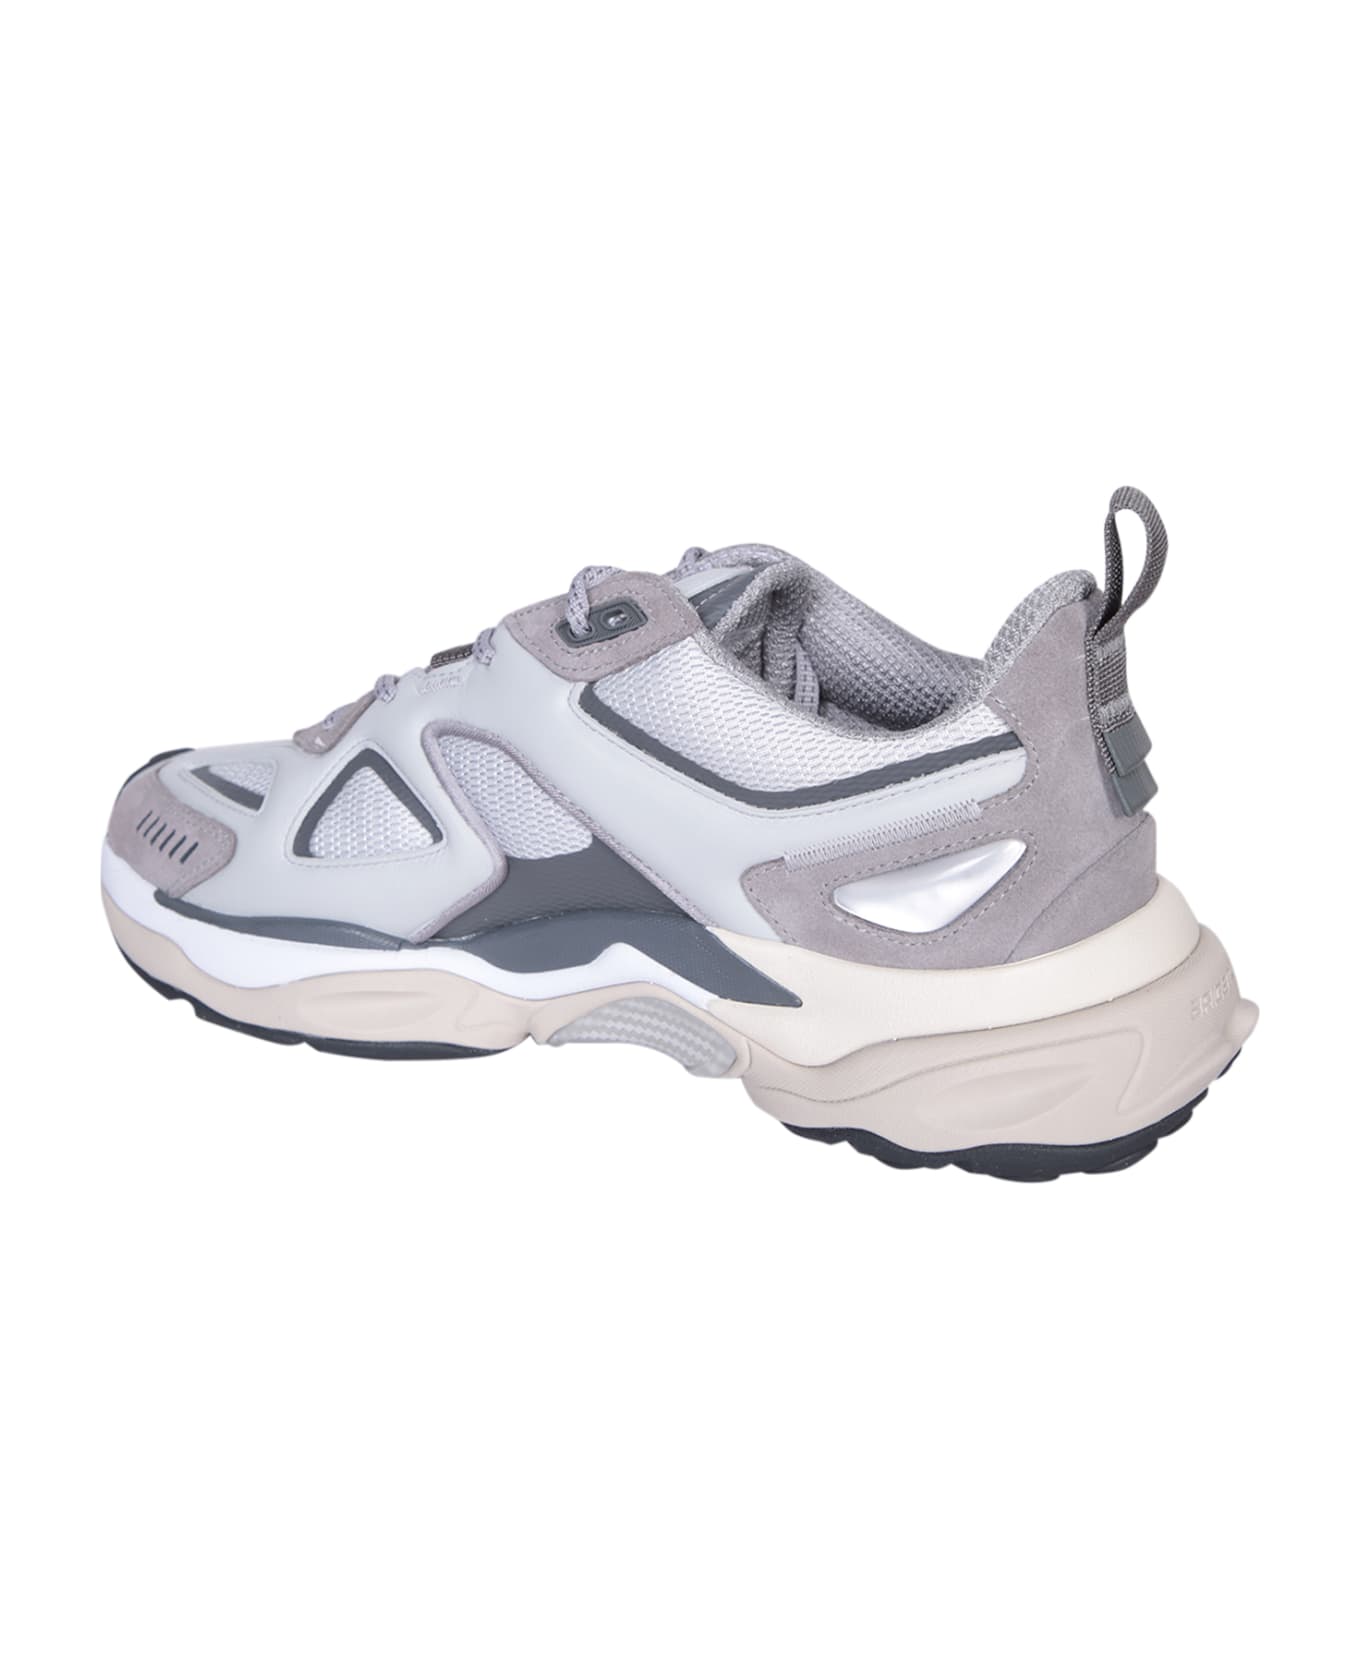 Axel Arigato Satellite Runner Grey Sneakers - Grey